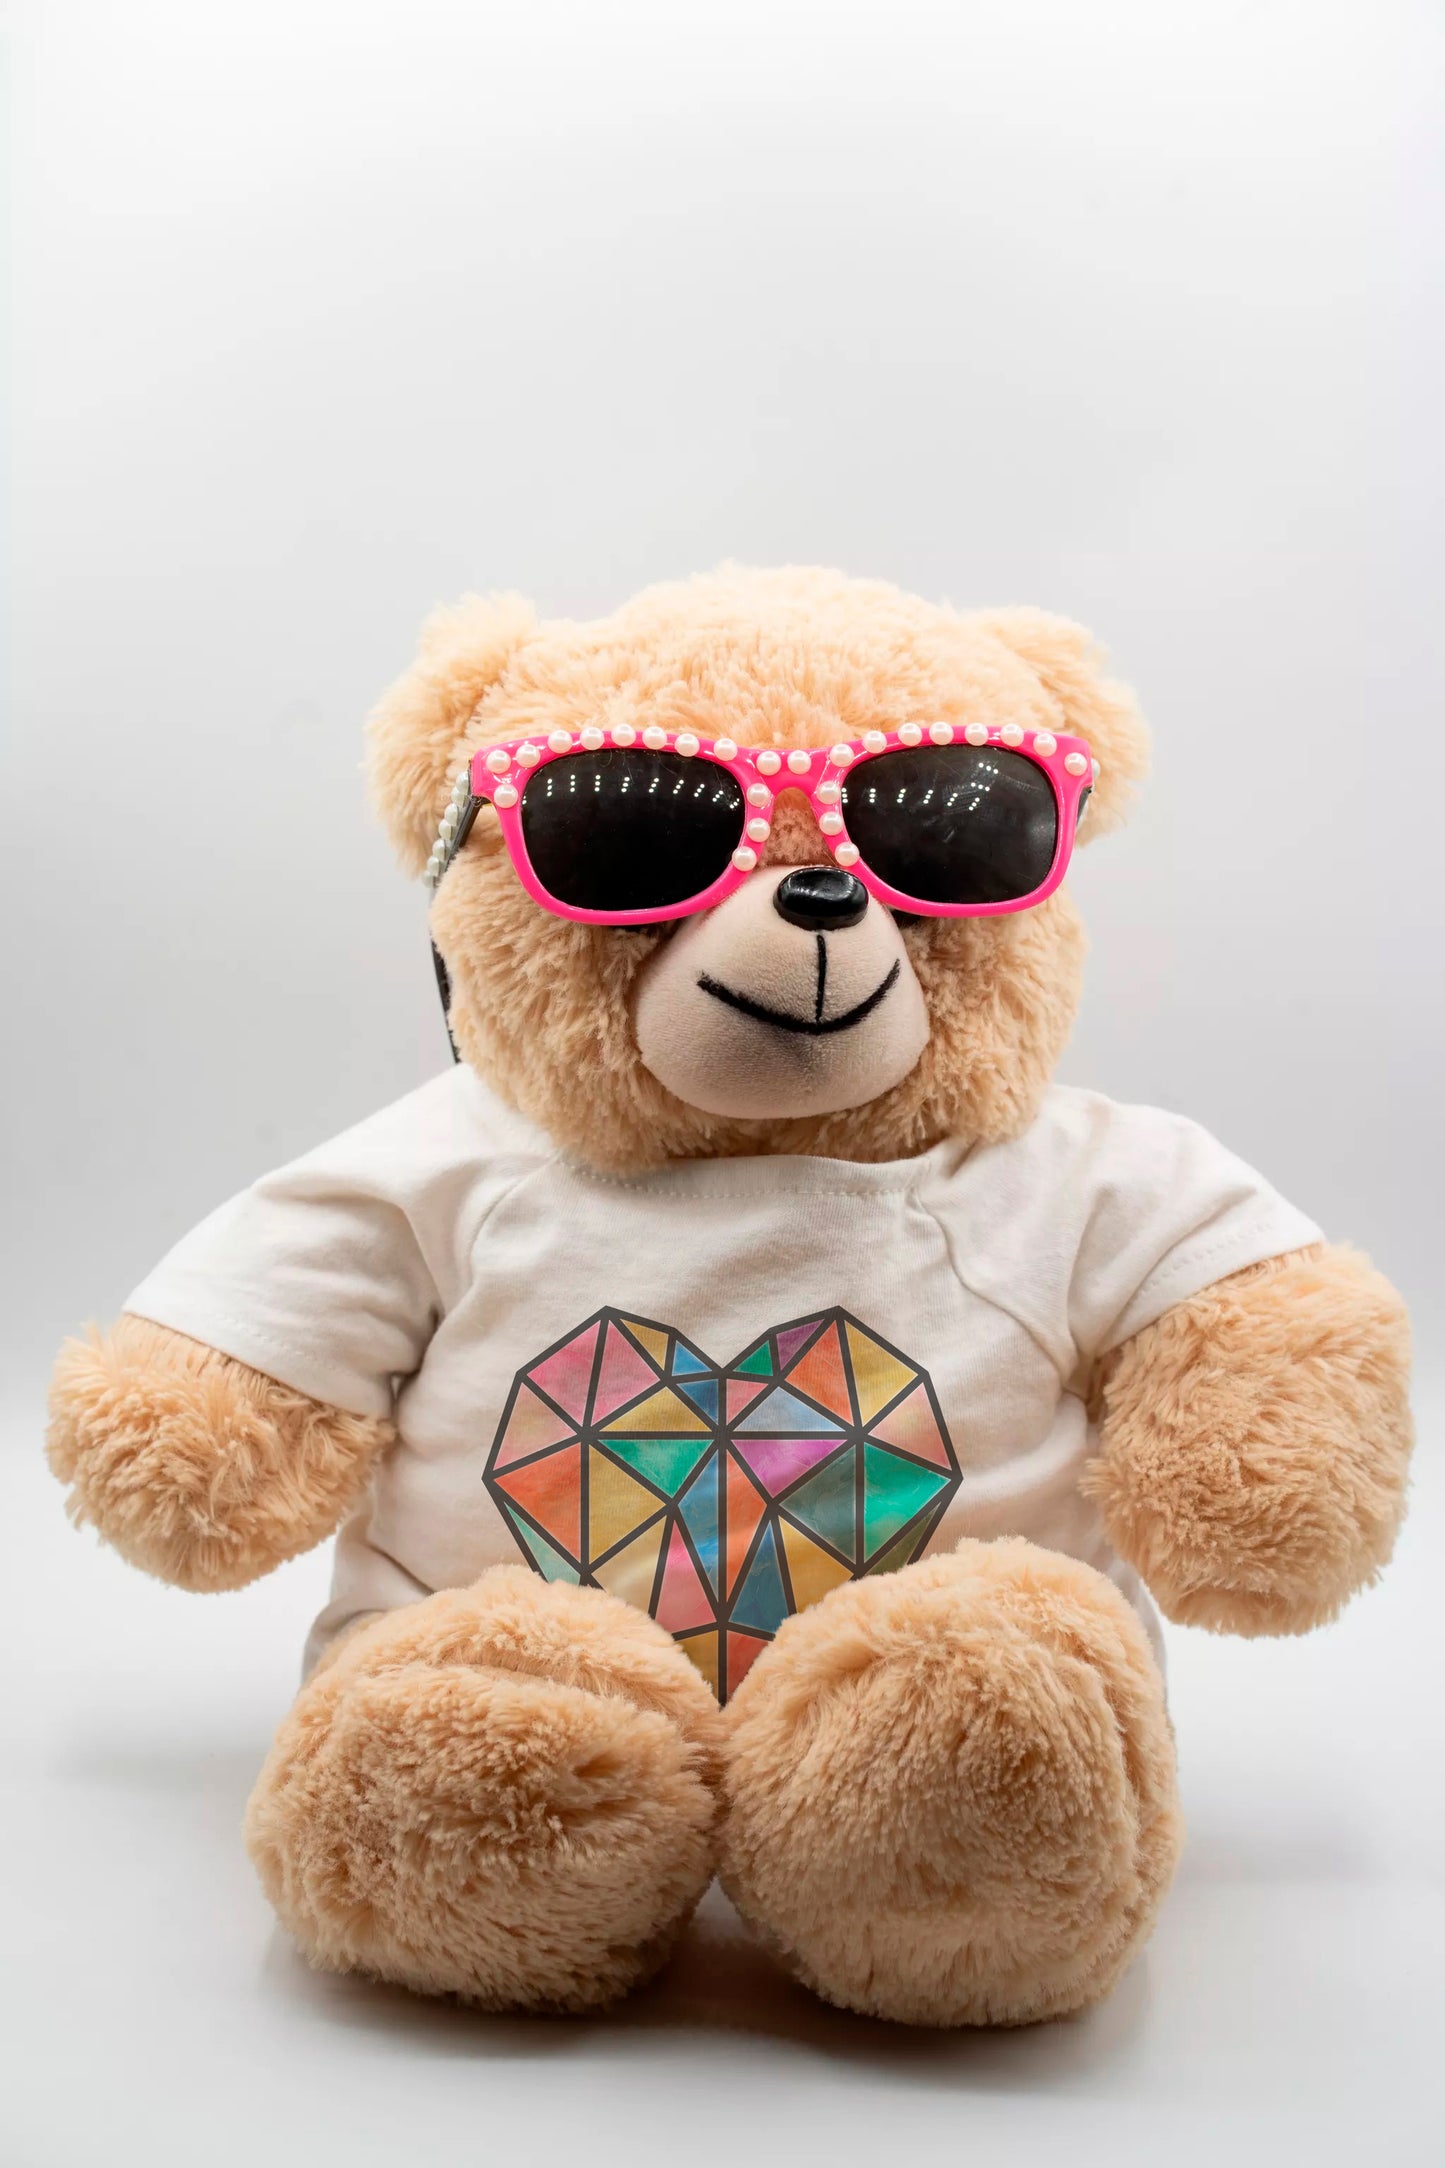 Build a Teddy Bear plus accessories Kit